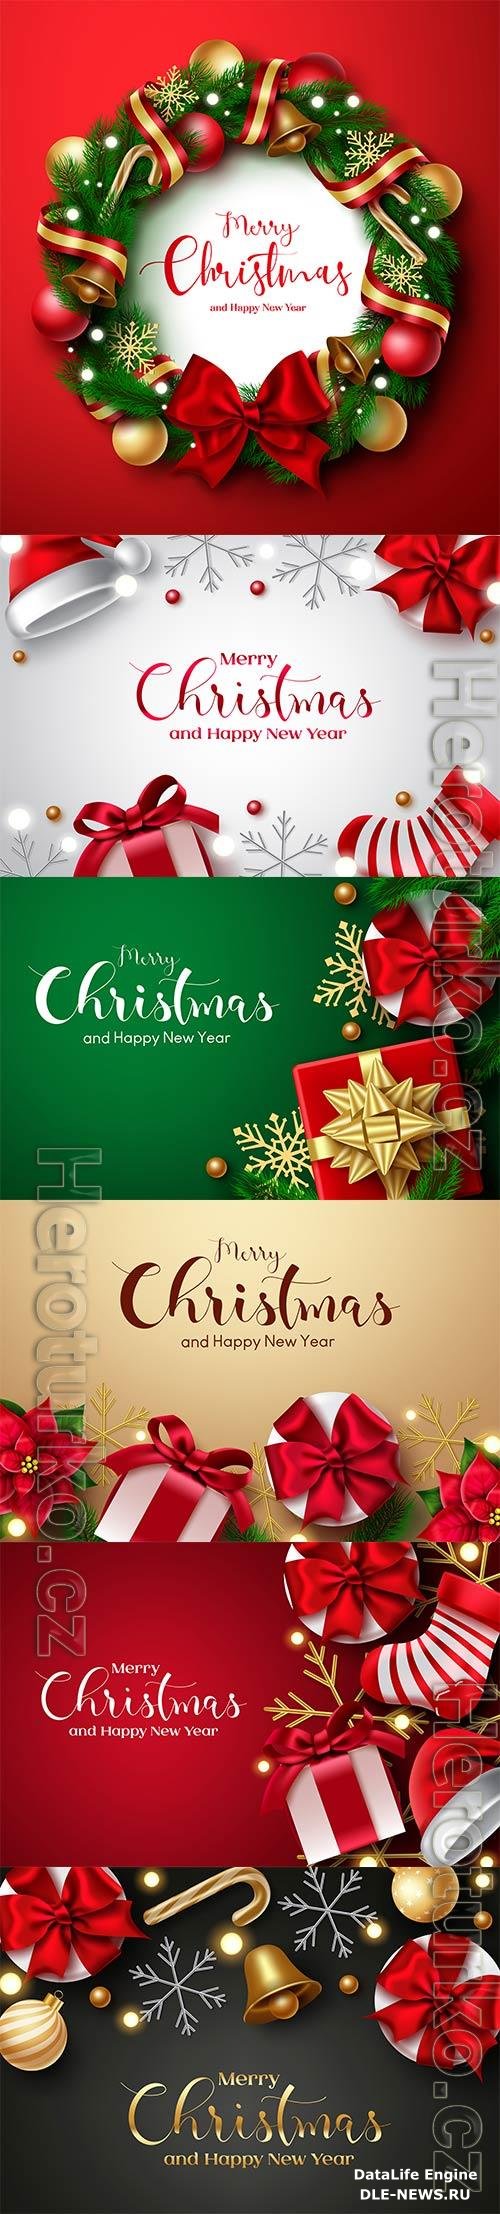 Christmas vector set merry christmas with santa claus